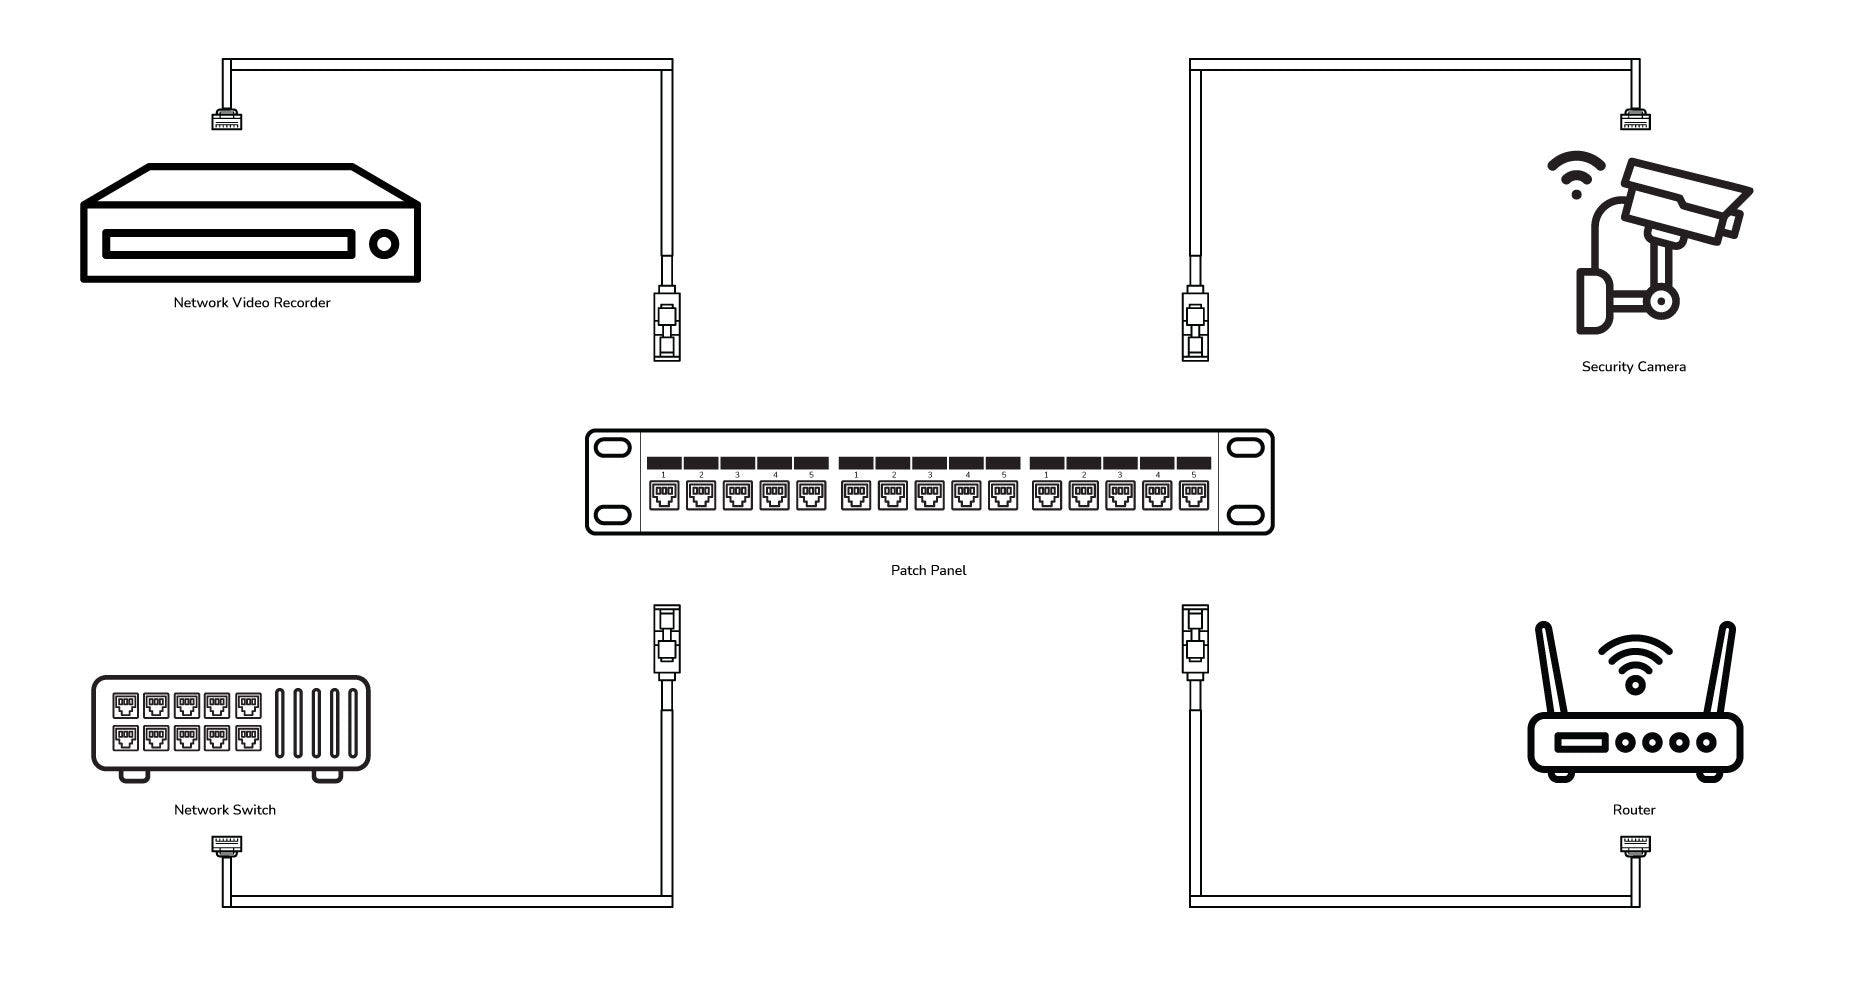 Blank Keystone Network 24-port Patch Panel, 1U High Density Strain Relief Support Bar